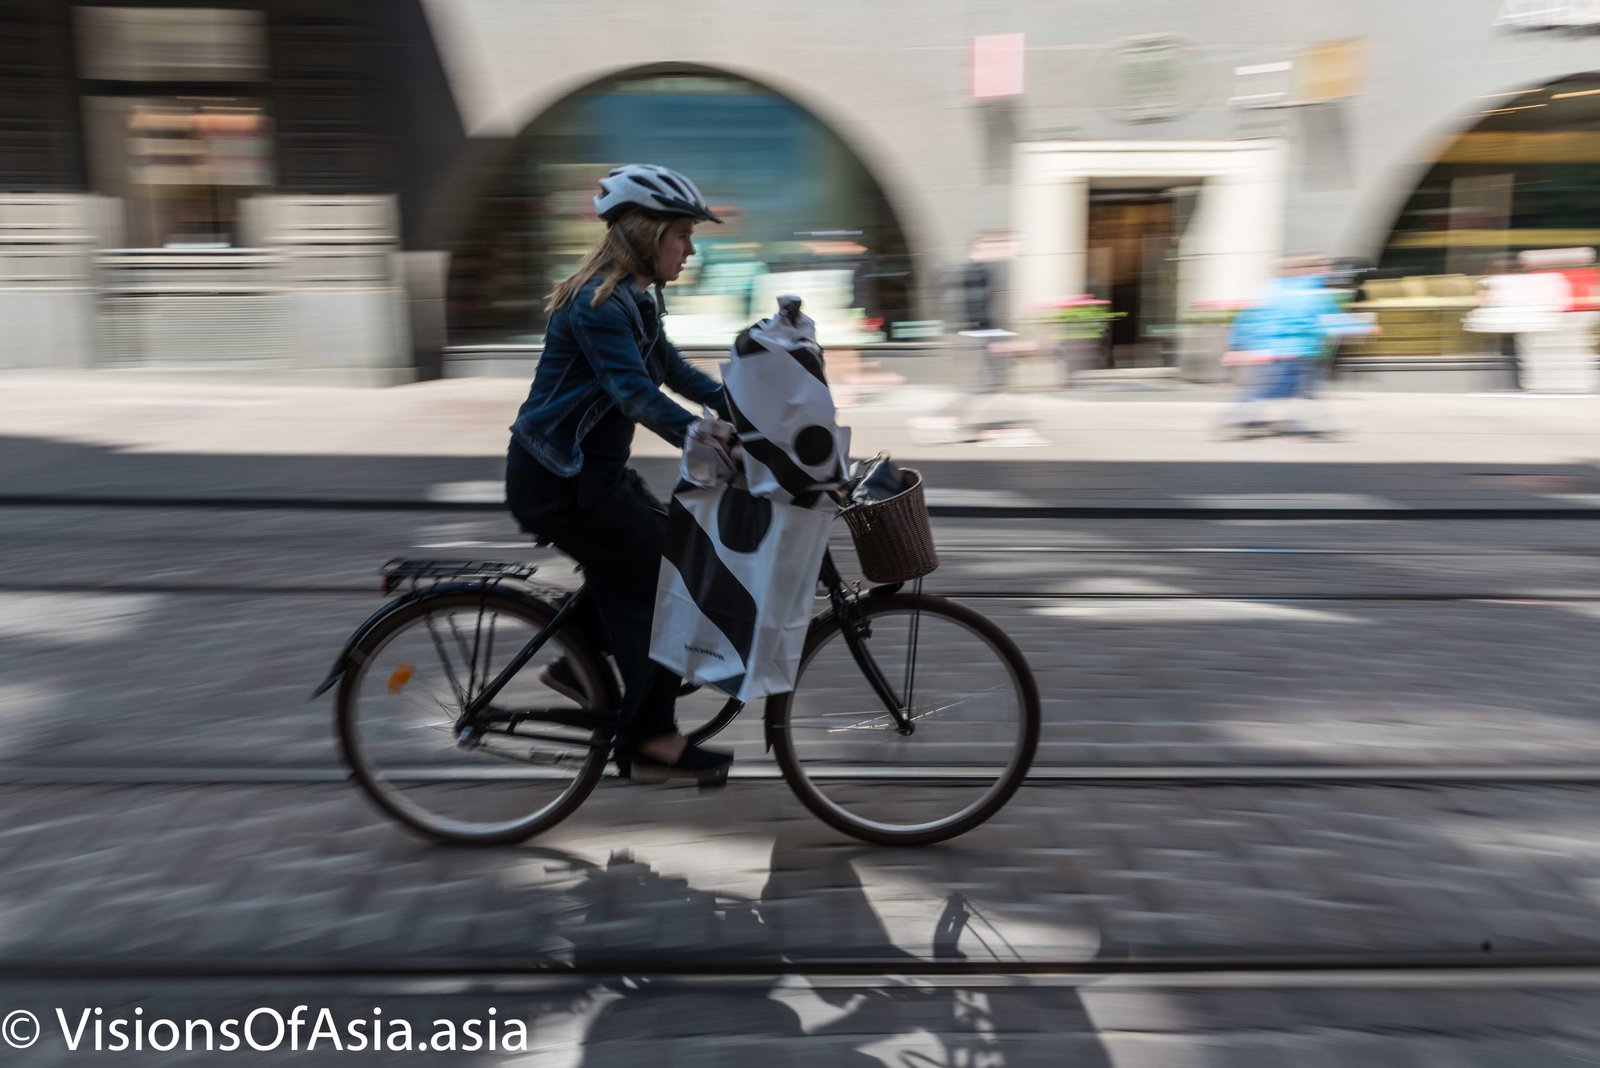 Finnish lady on bicycle in Helsinki